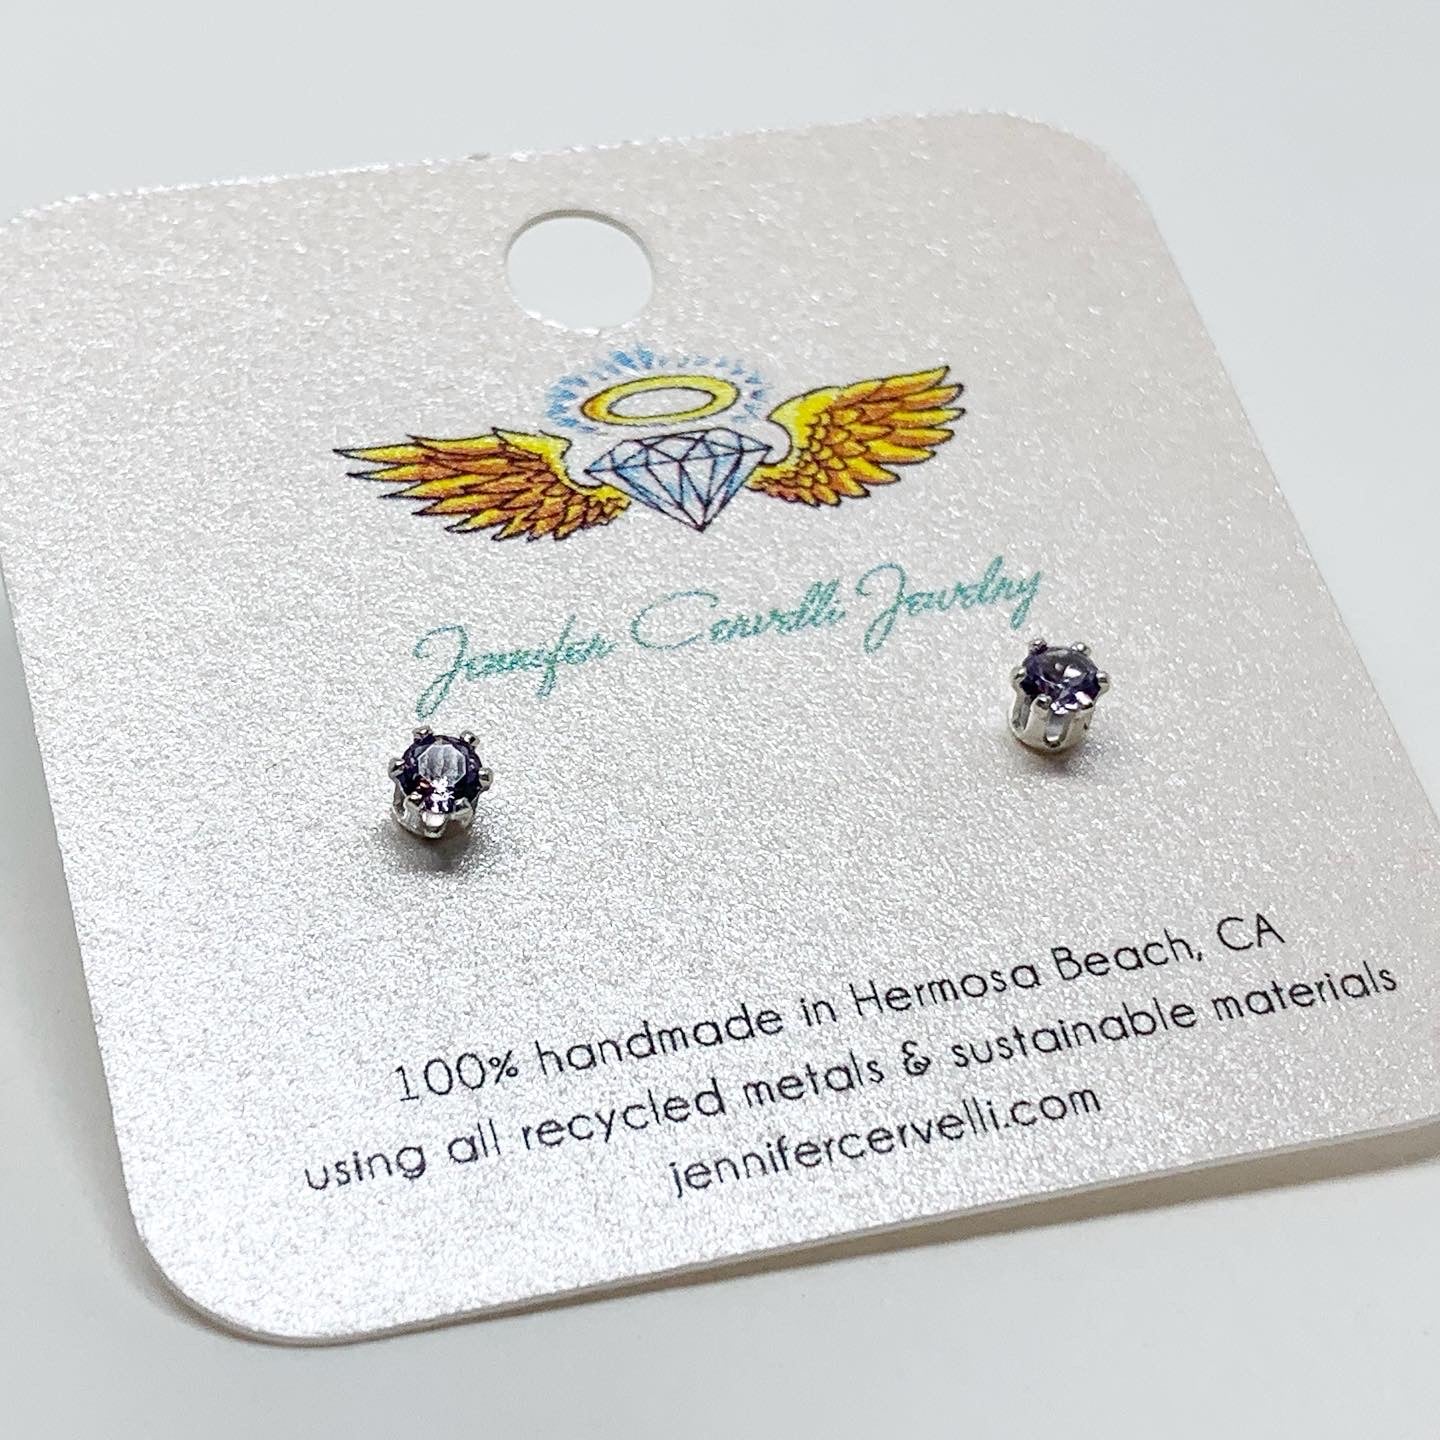 Amethyst Birthstone Stud Earrings - Handmade in California USA
Keywords: Amethyst birthstone jewelry, stud earrings, handmade jewelry, California USA, gemstone jewelry Bijou Her